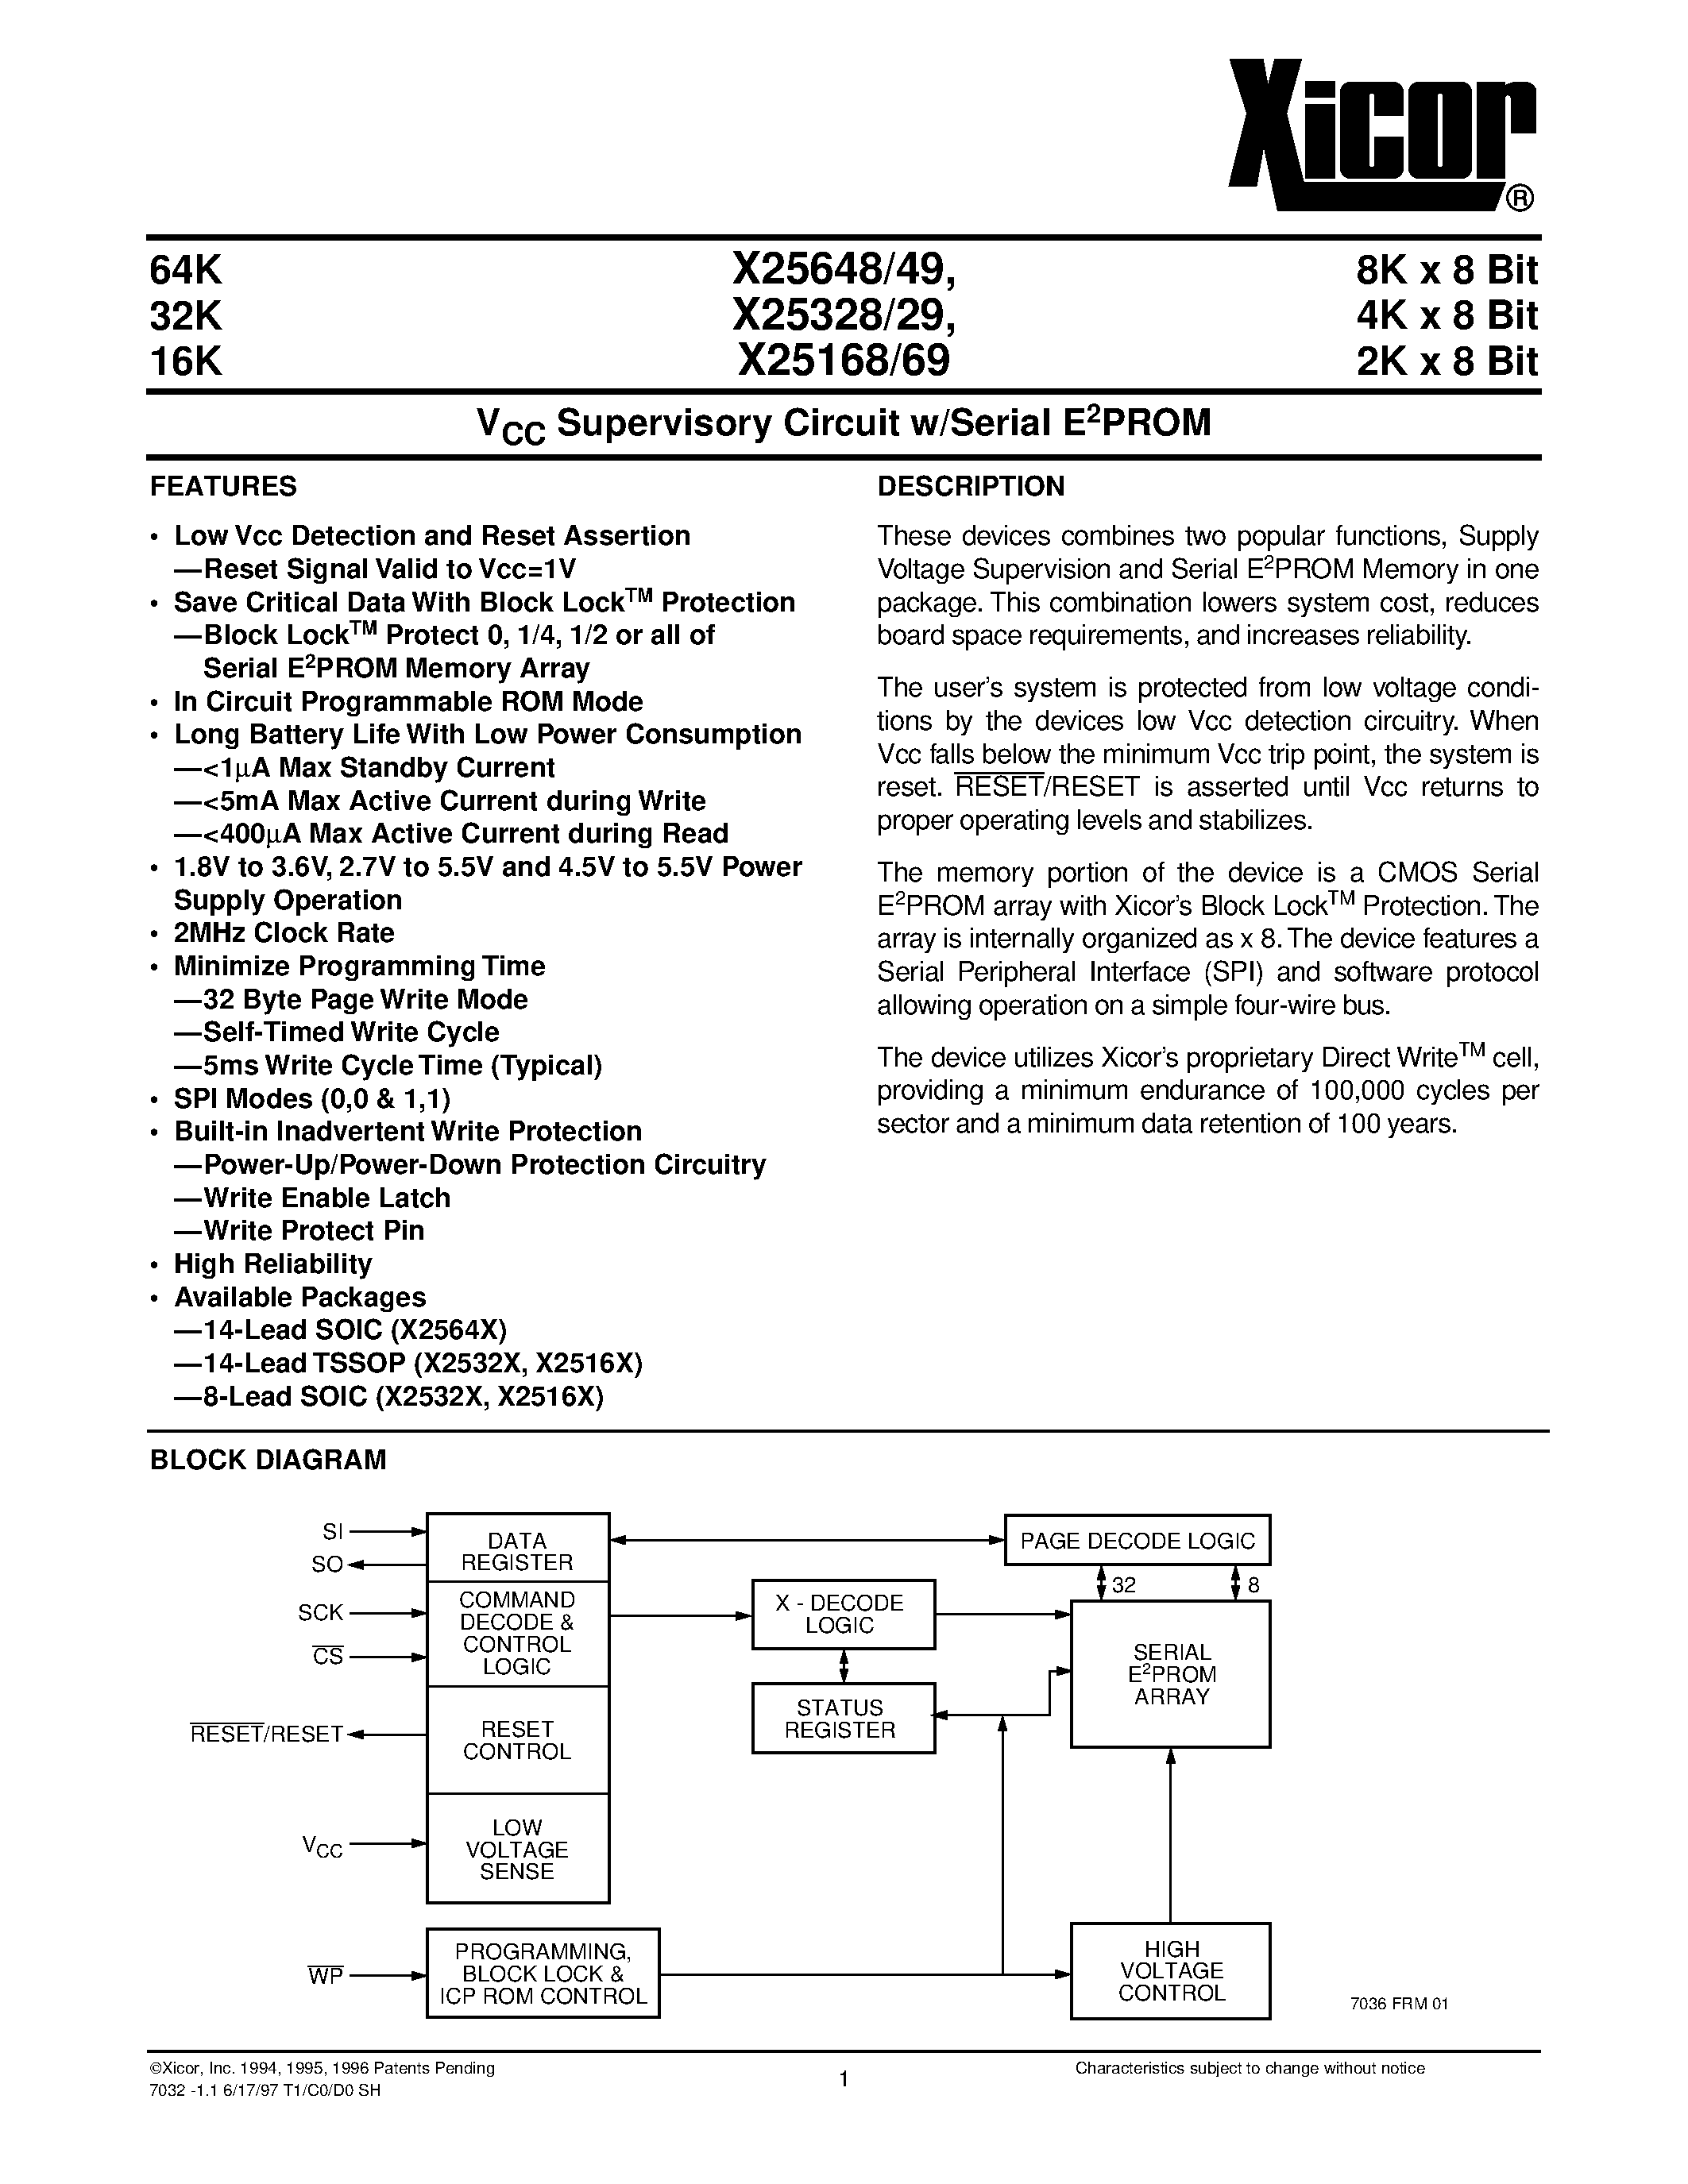 Даташит X25649V14-2.7 - V CC Supervisory Circuit w/Serial E 2 PROM страница 1